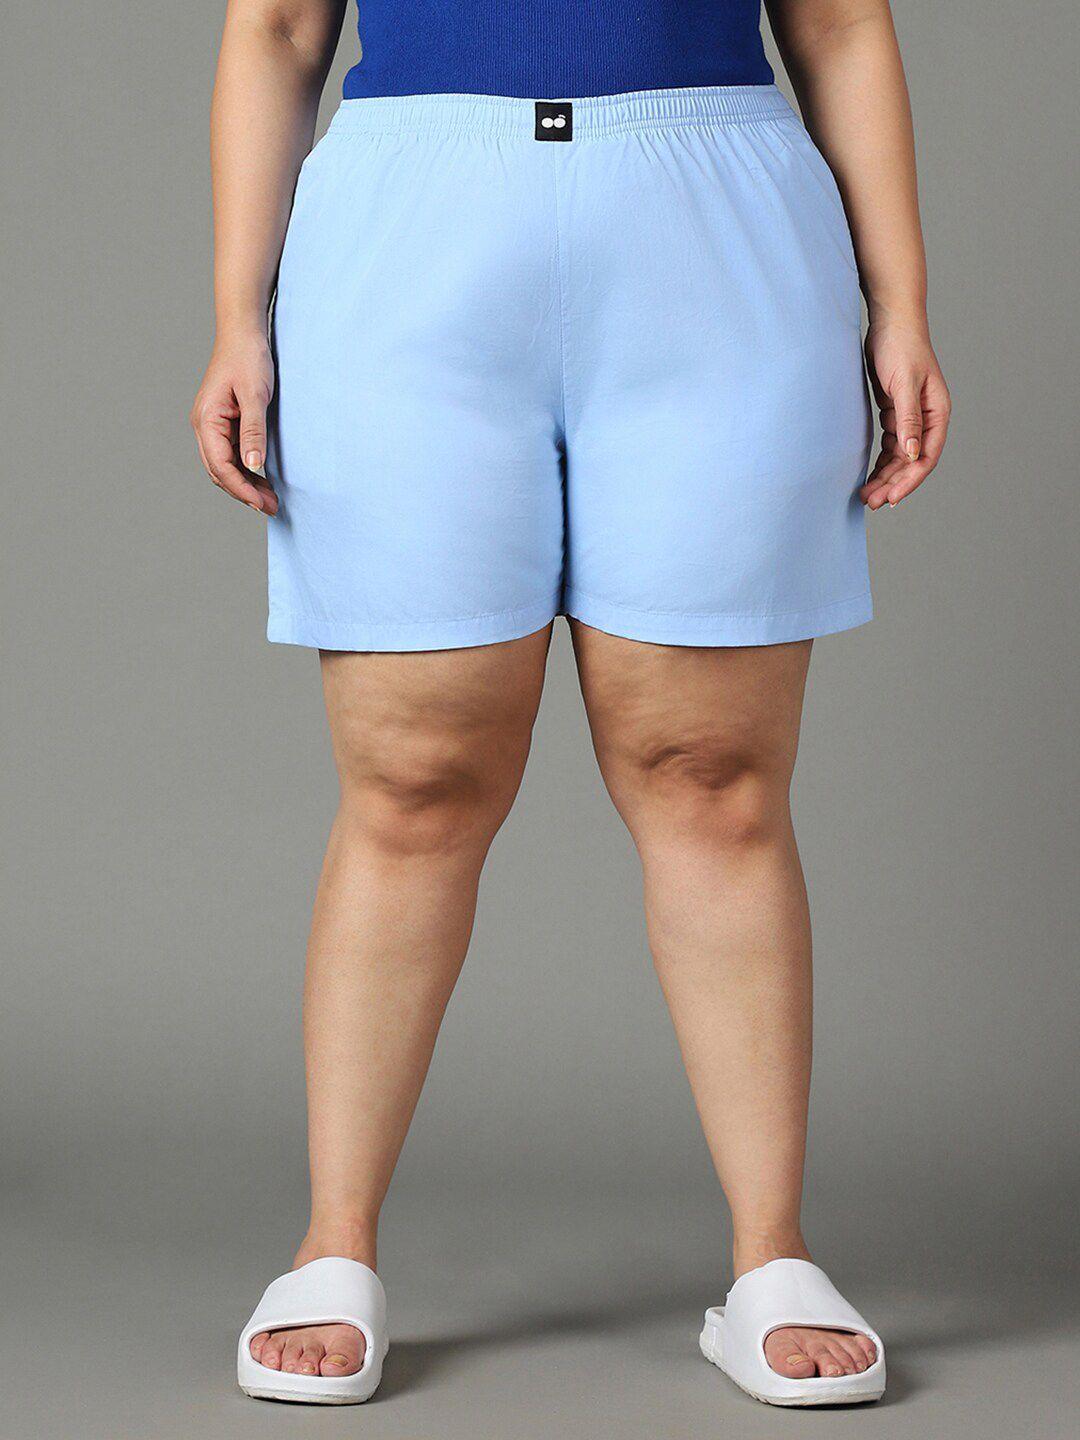 bewakoof-women-plus-size-cotton-lounge-shorts